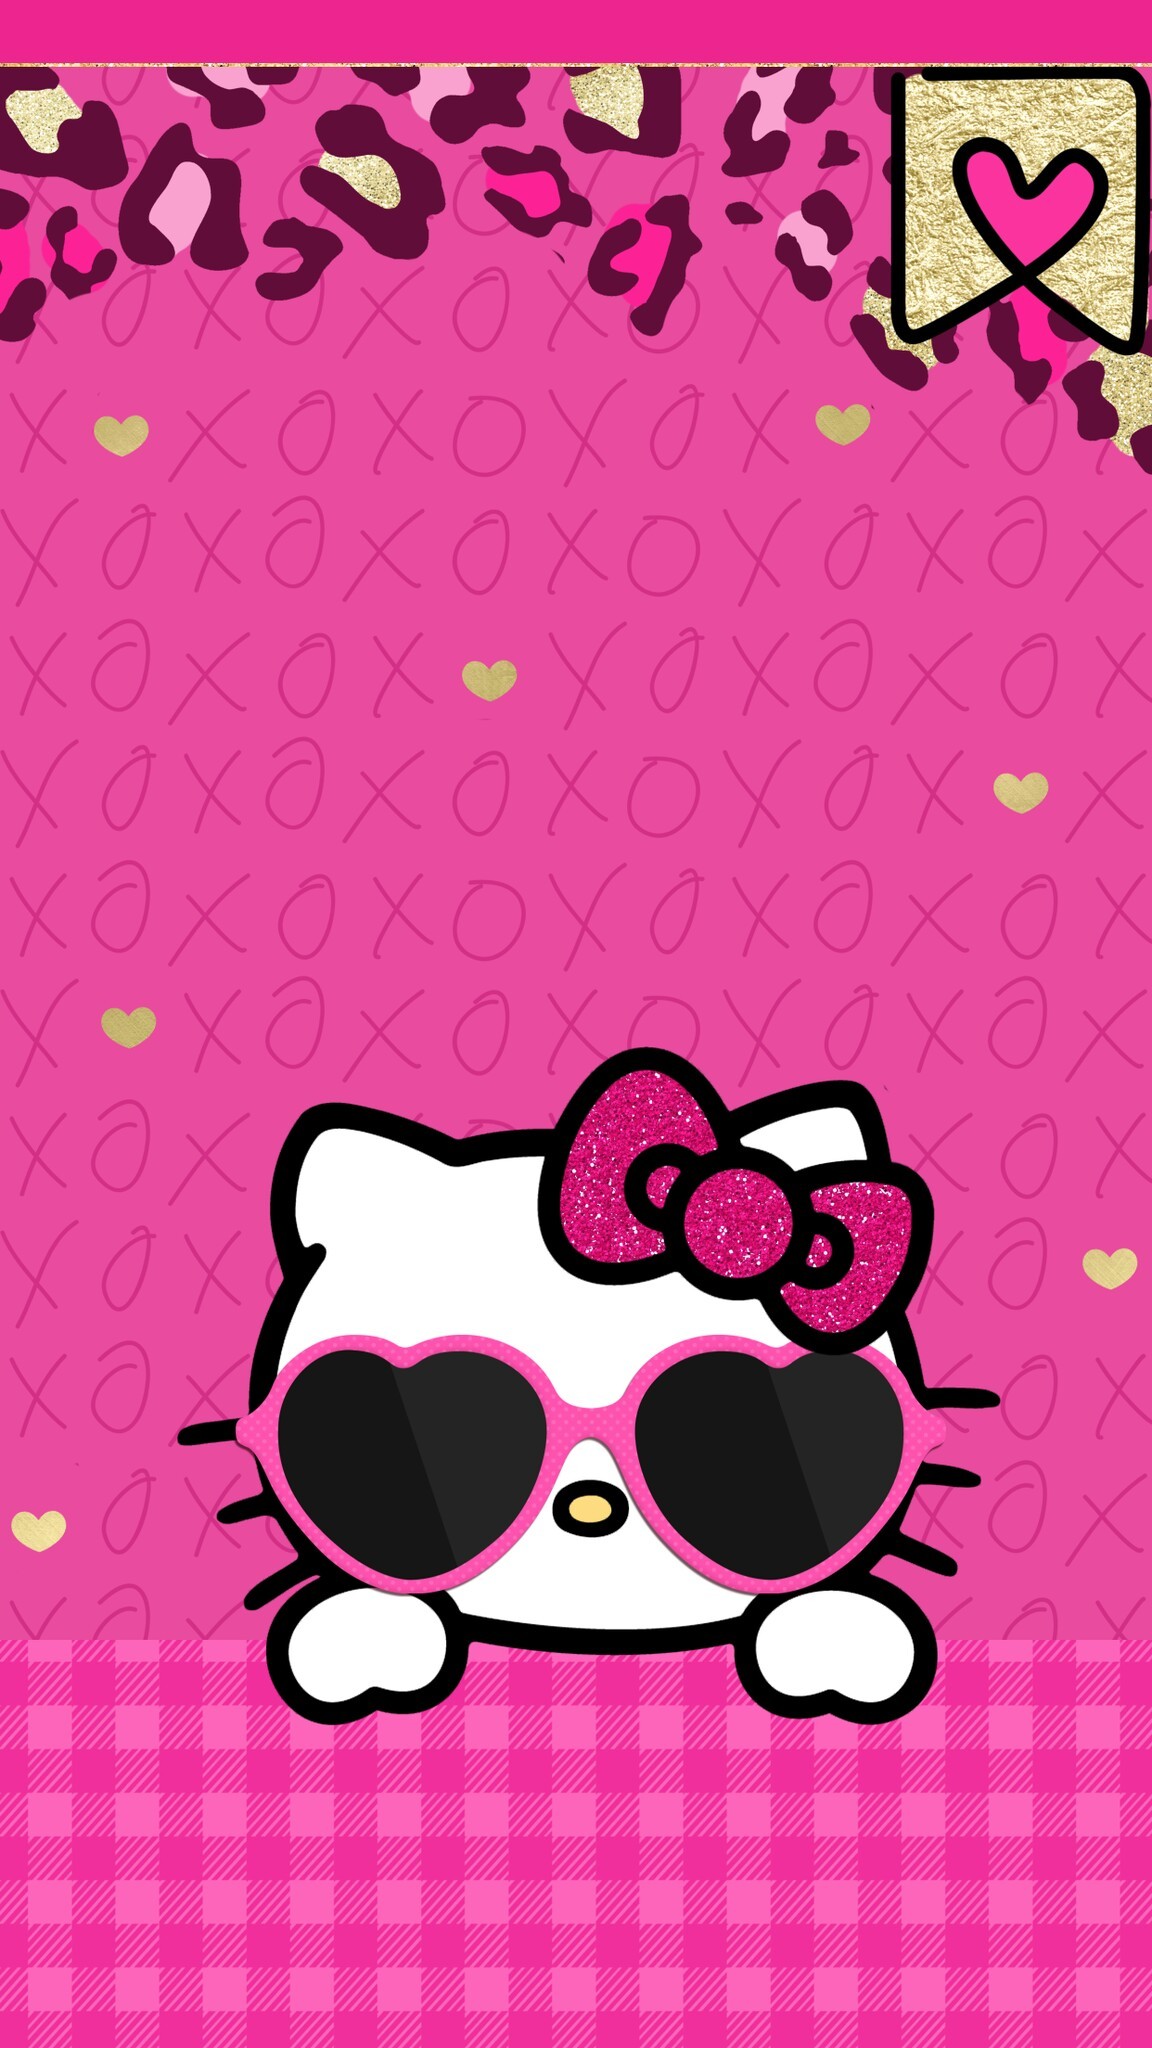 Sanrio Wallpaper, Hello Kitty Wallpaper, Phone Wallpaper, Blog, Phones, iPhone Funds, Screen